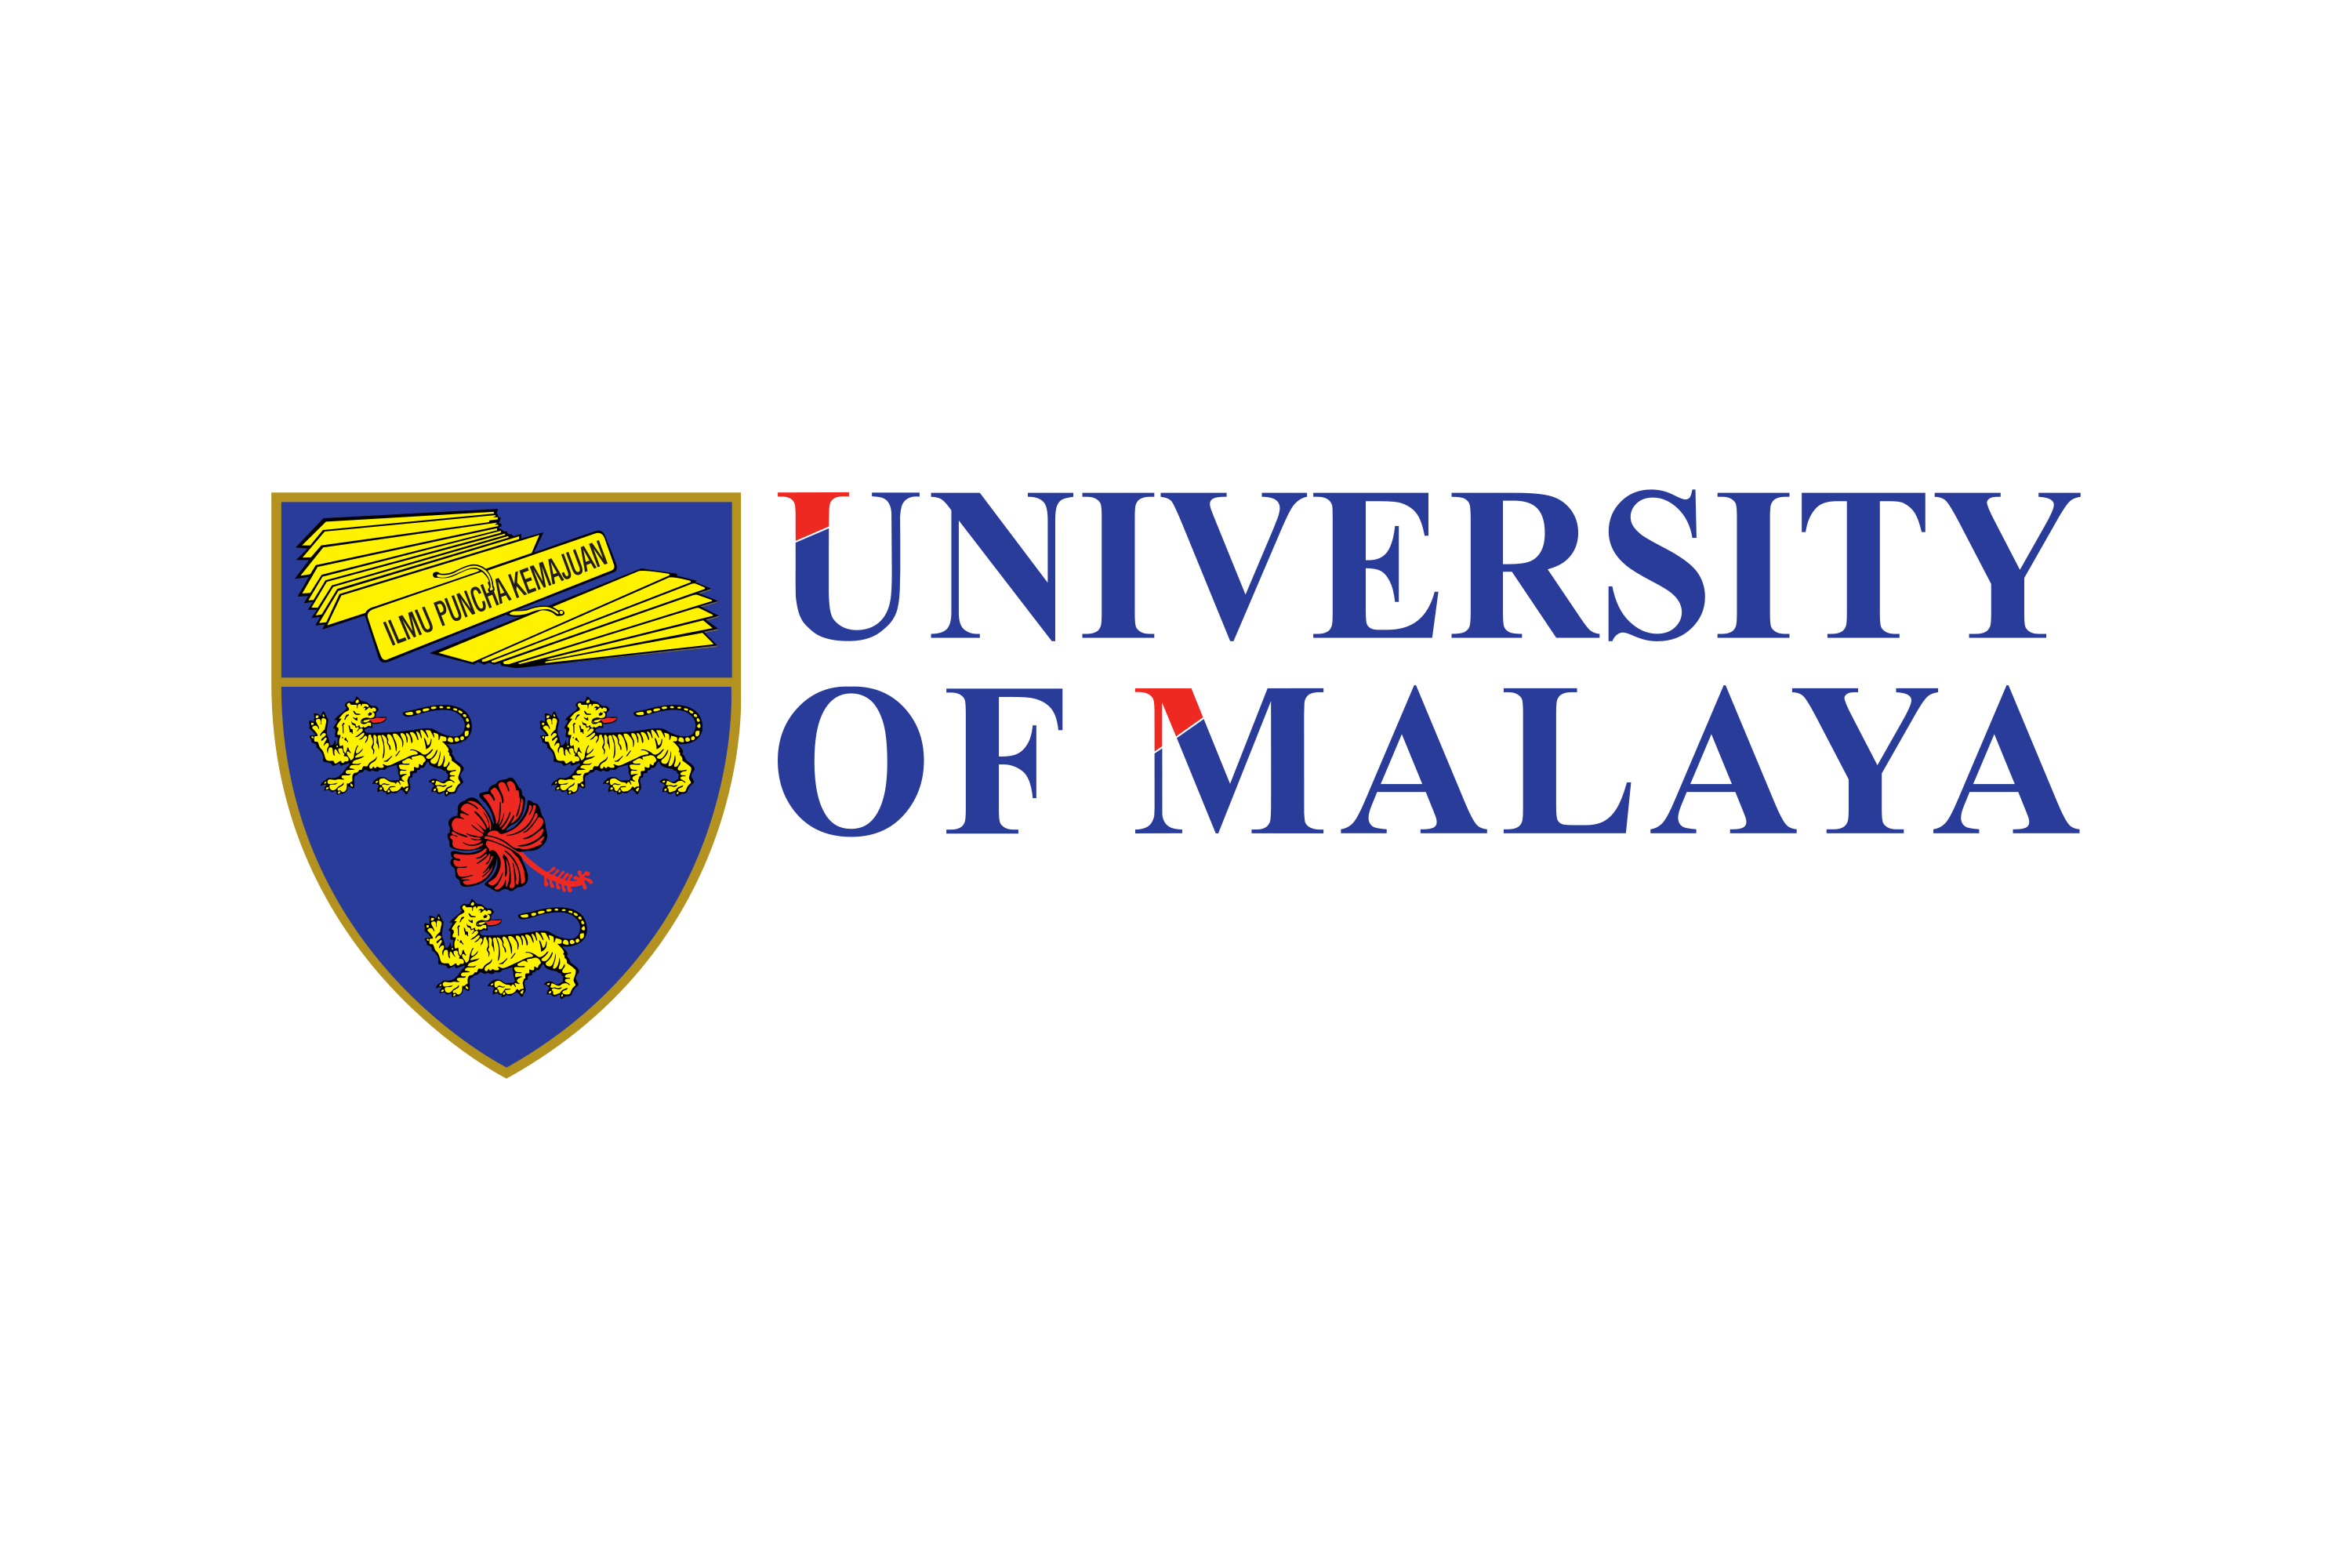 Download University Of Malaya Um Universiti Malaya Logo In Svg Vector Or Png File Format Logo Wine